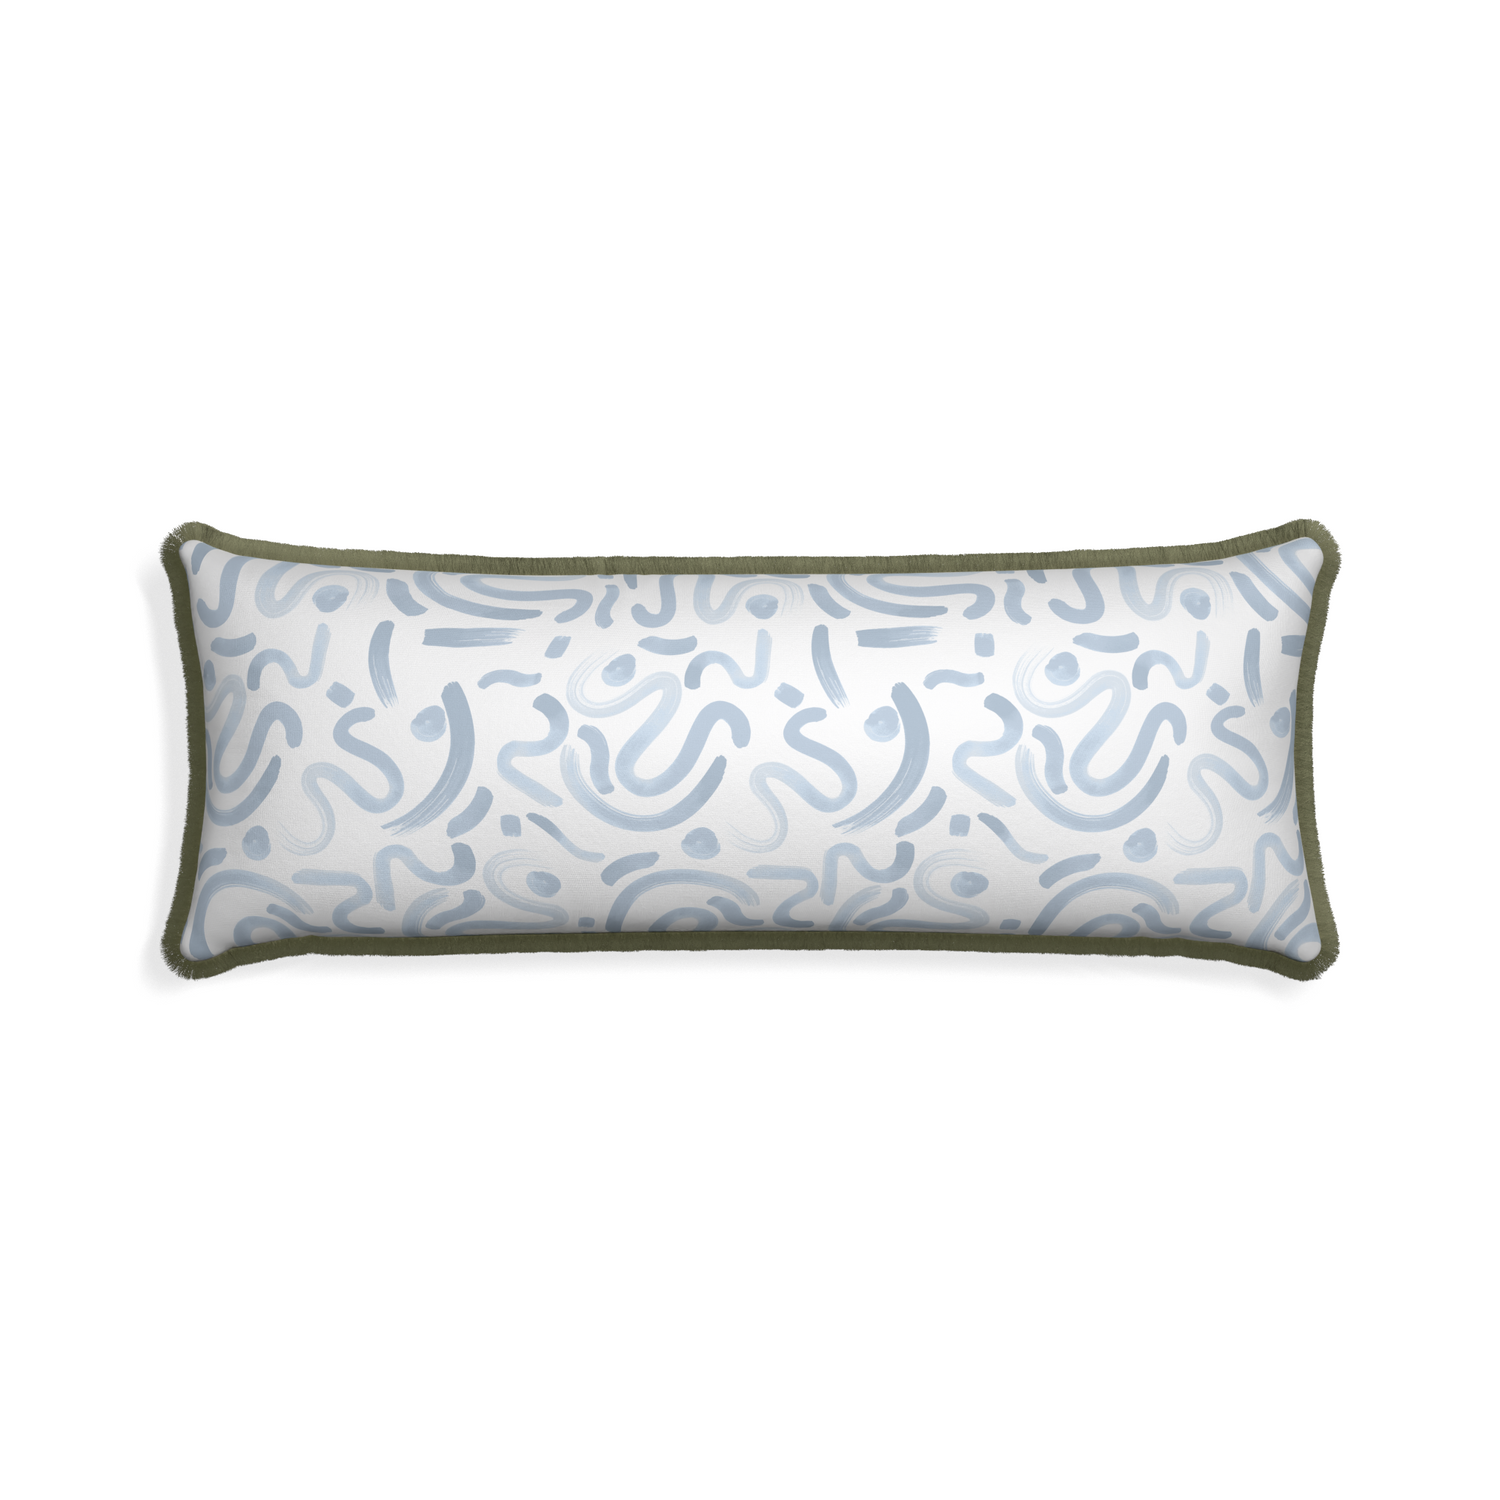 Xl-lumbar hockney sky custom pillow with sage fringe on white background